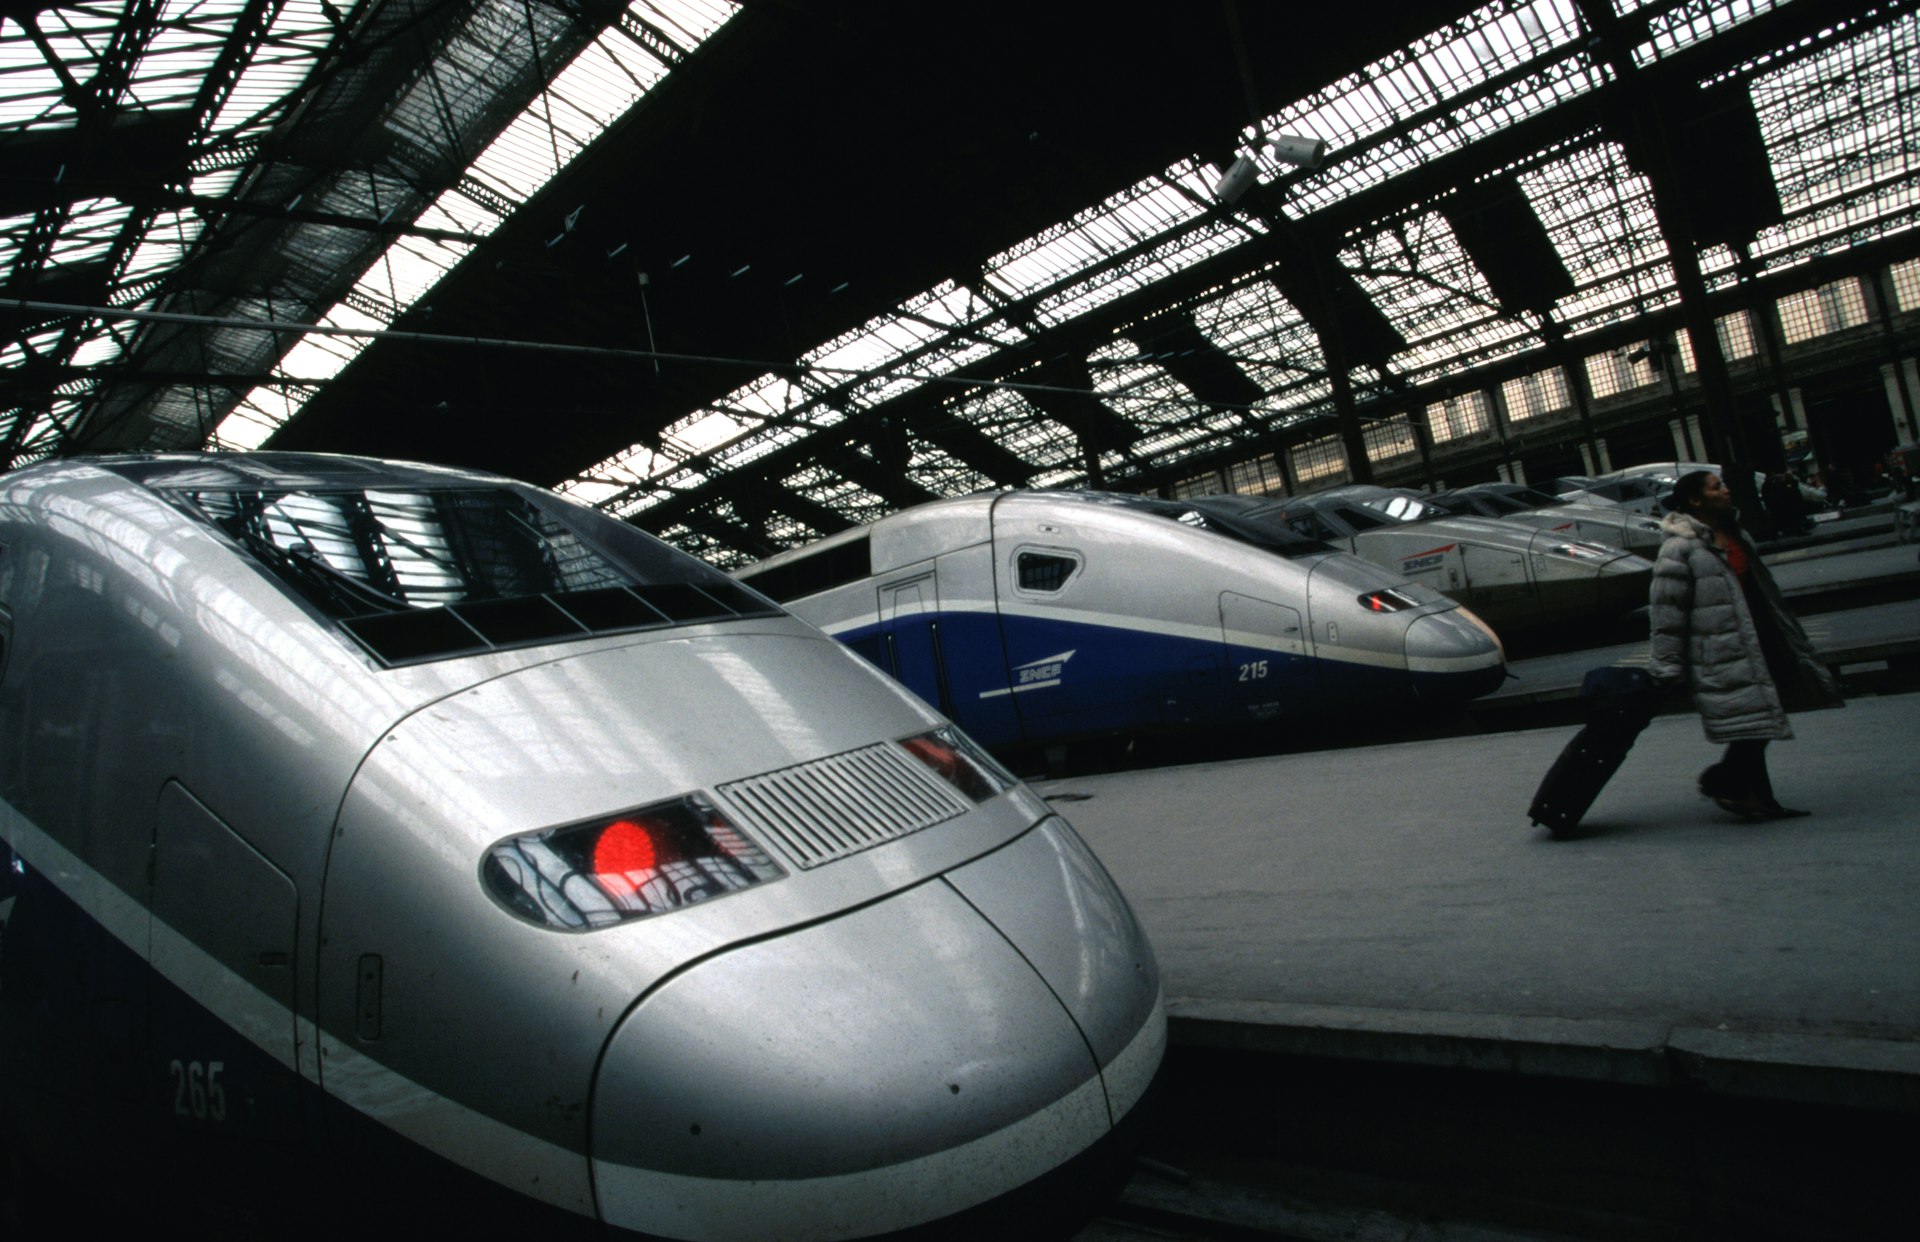 TGV trains at Gare de Lyon Railway Station